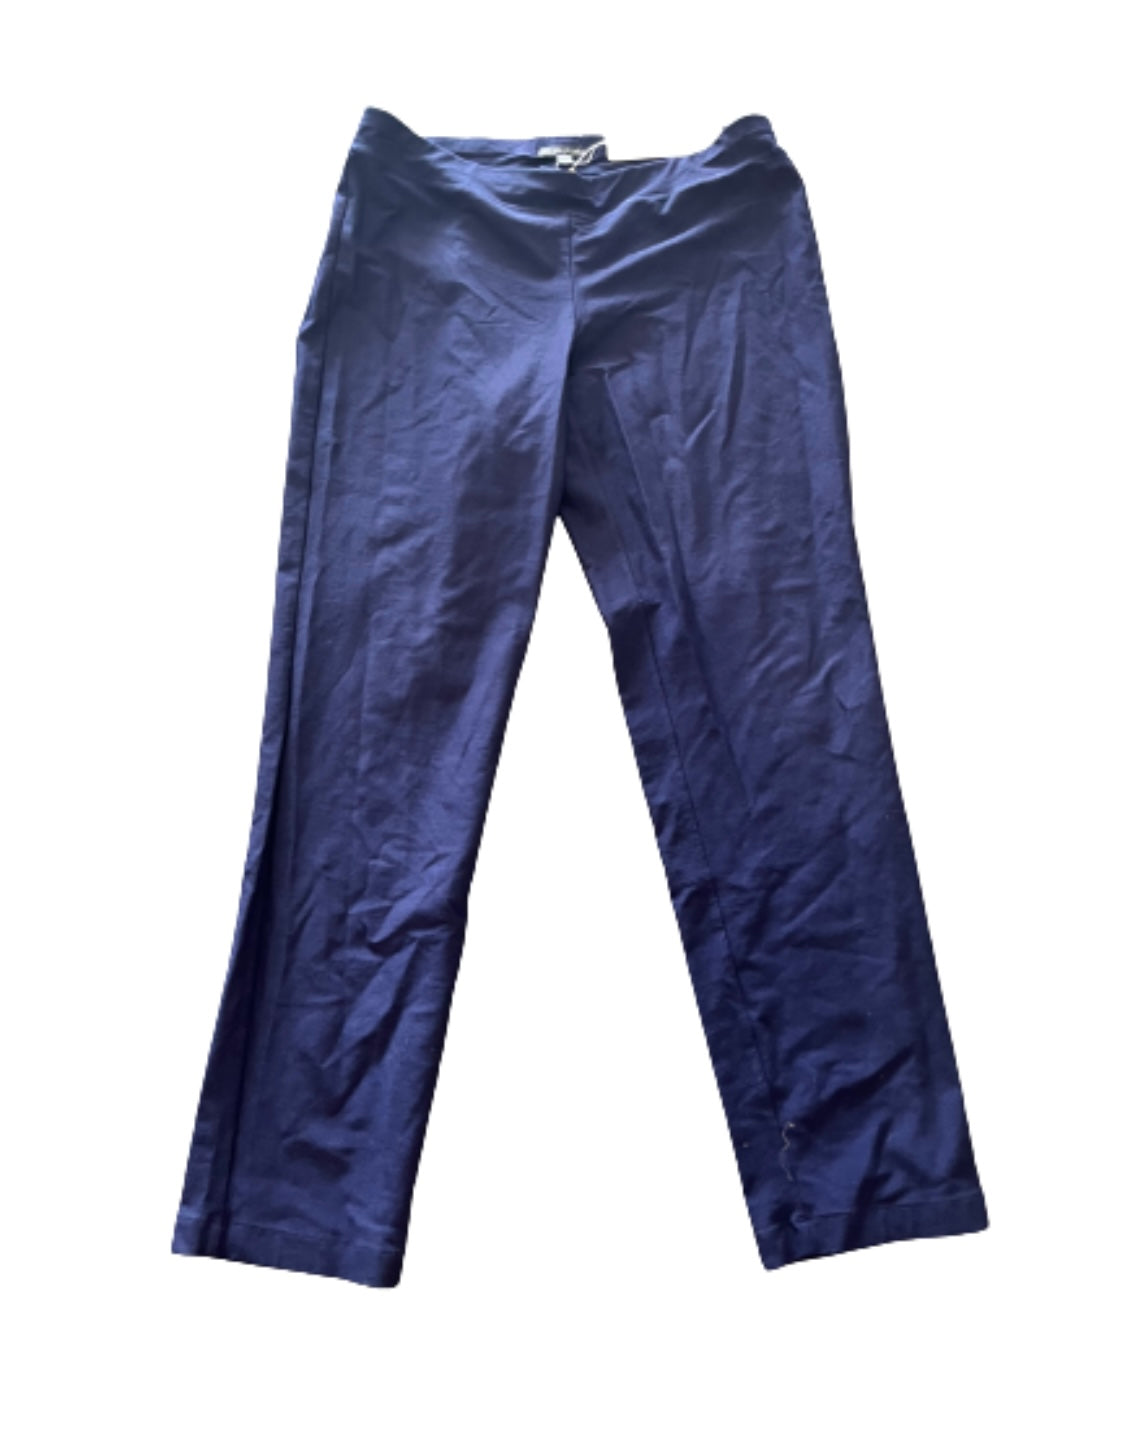 BONES: Dr. Brennan's Eileen Fisher  Designer Pants (10)